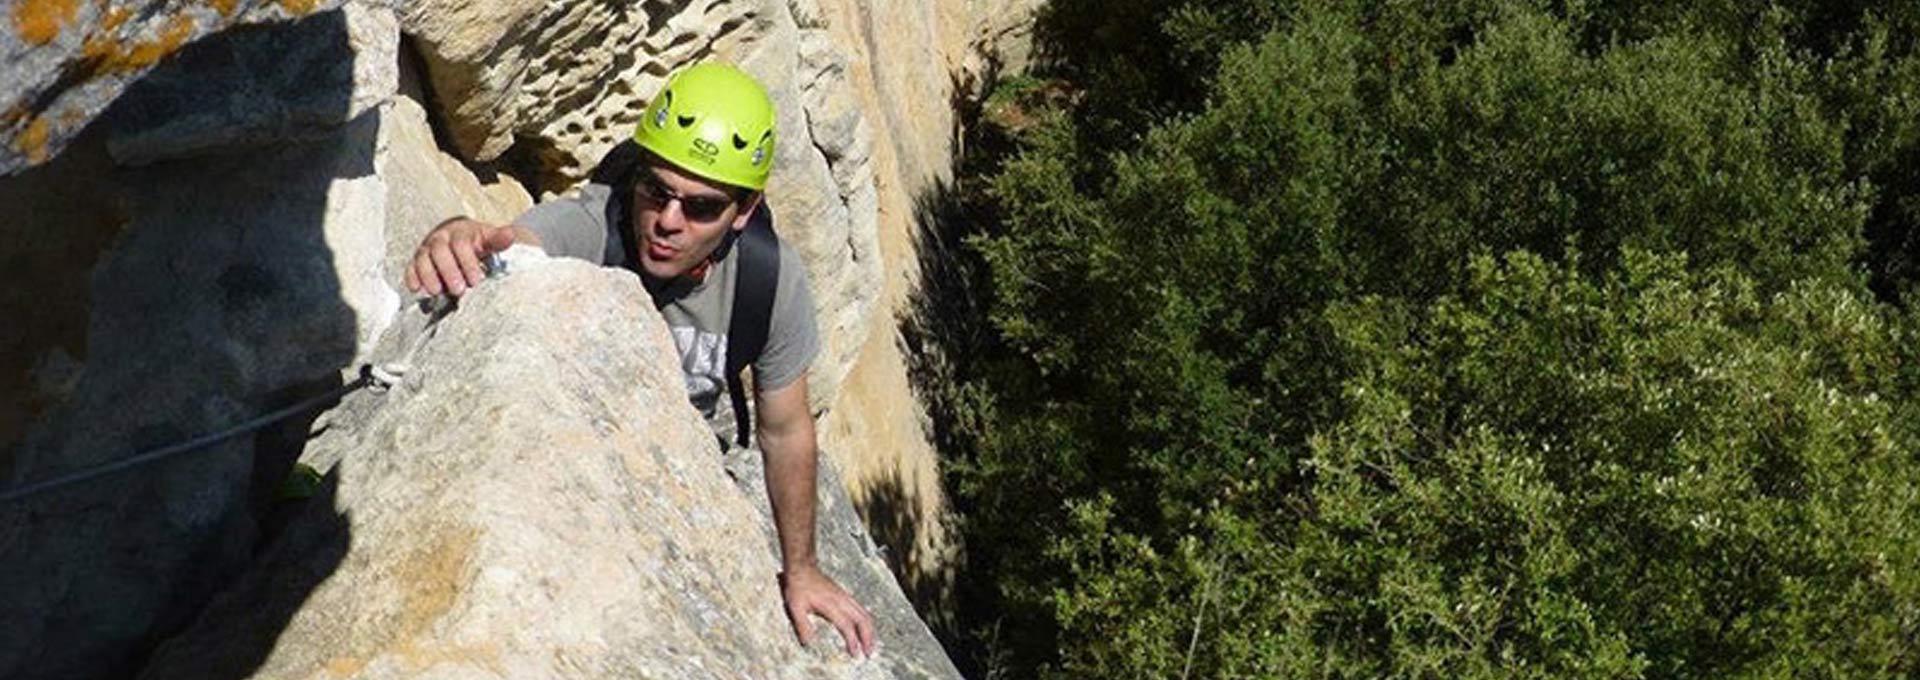 Climbing course in Luberon, Vaucluse, Gard (Provence)